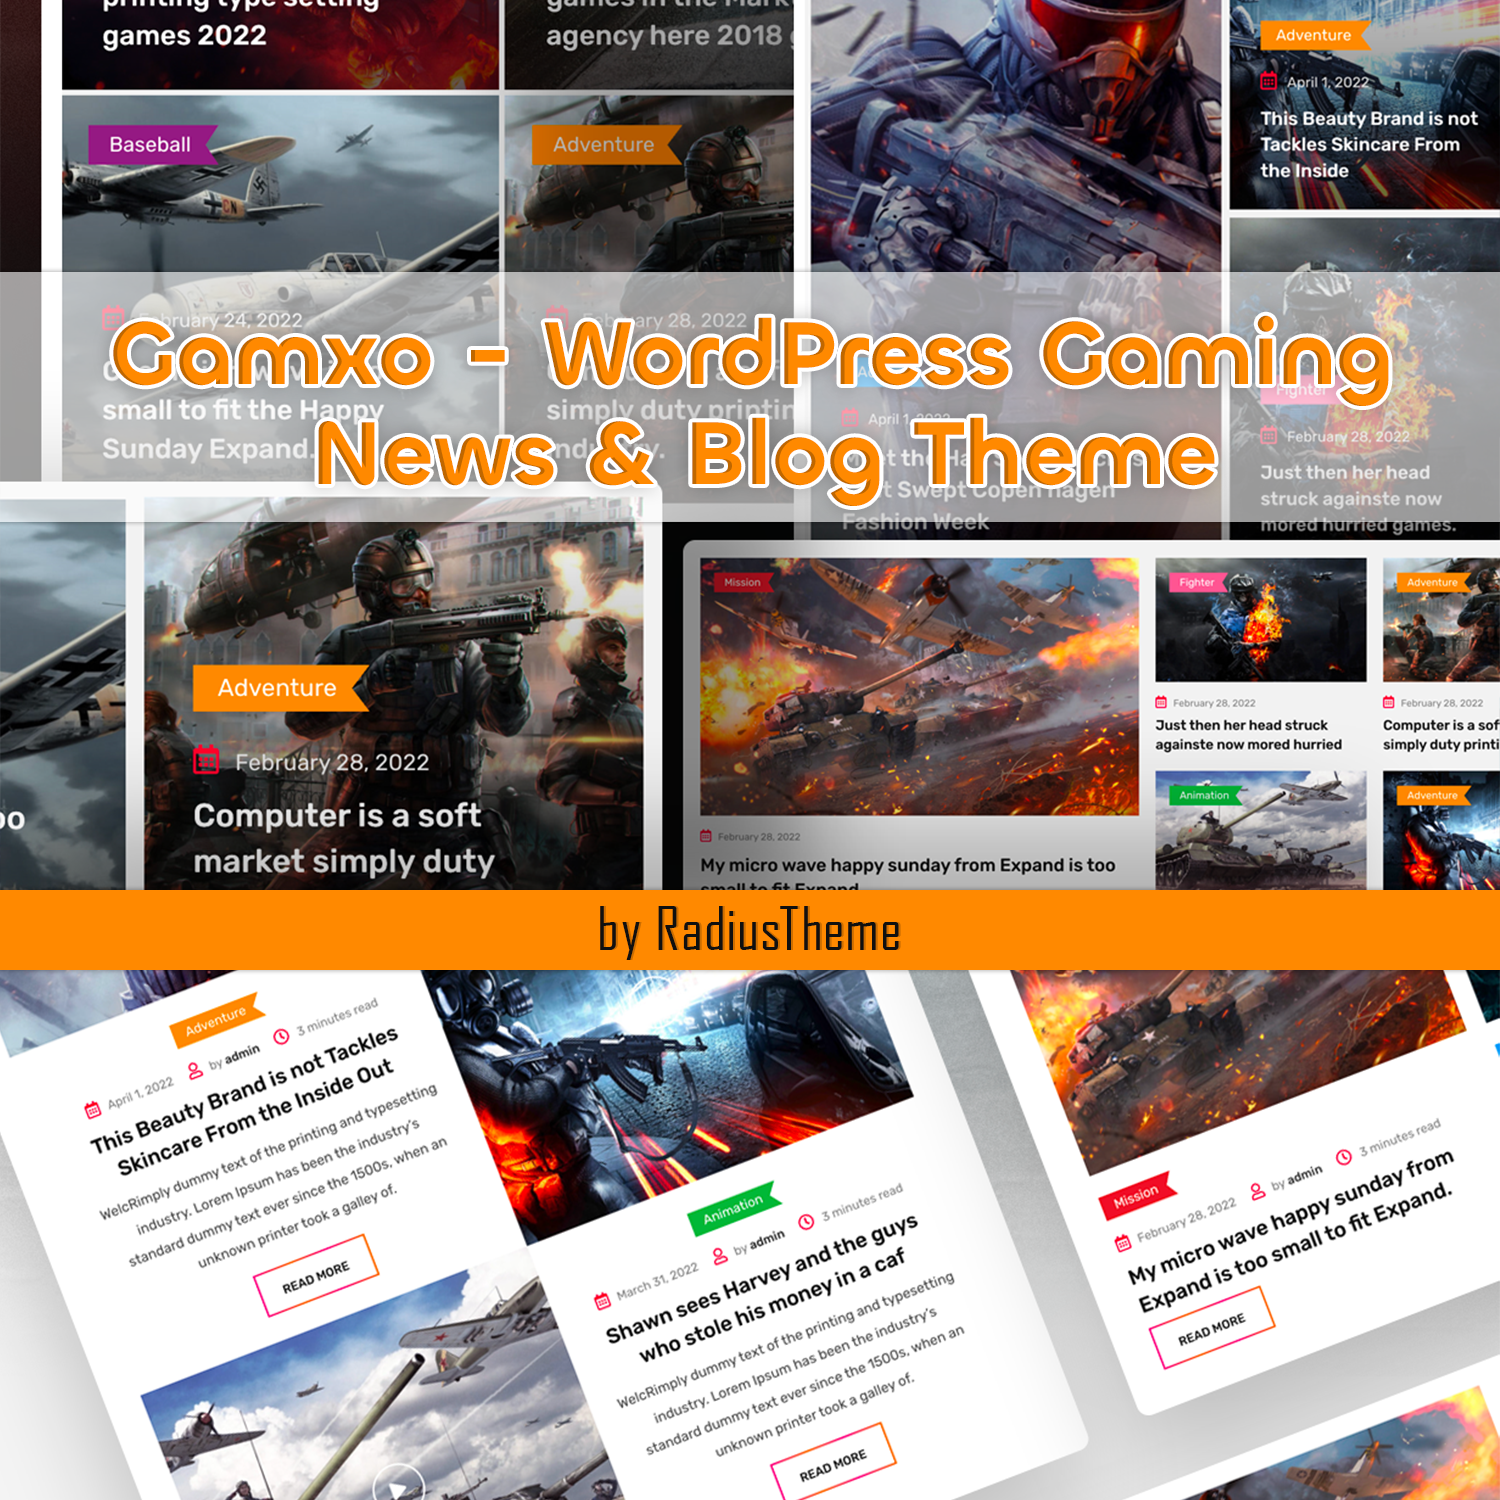 Preview gamxo wordpress gaming news blog theme.